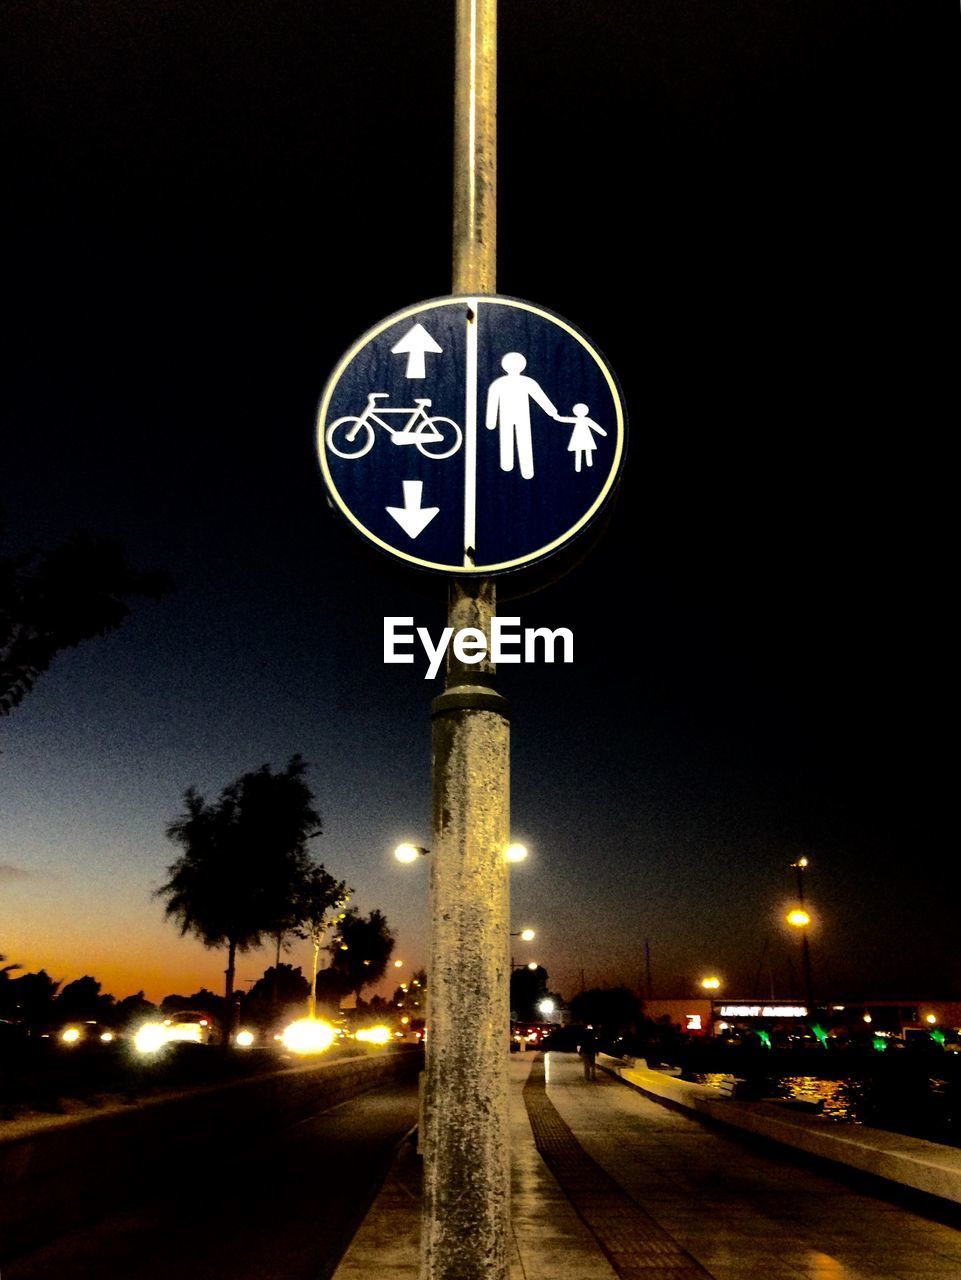 INFORMATION SIGN ON ILLUMINATED STREET LIGHT AT NIGHT